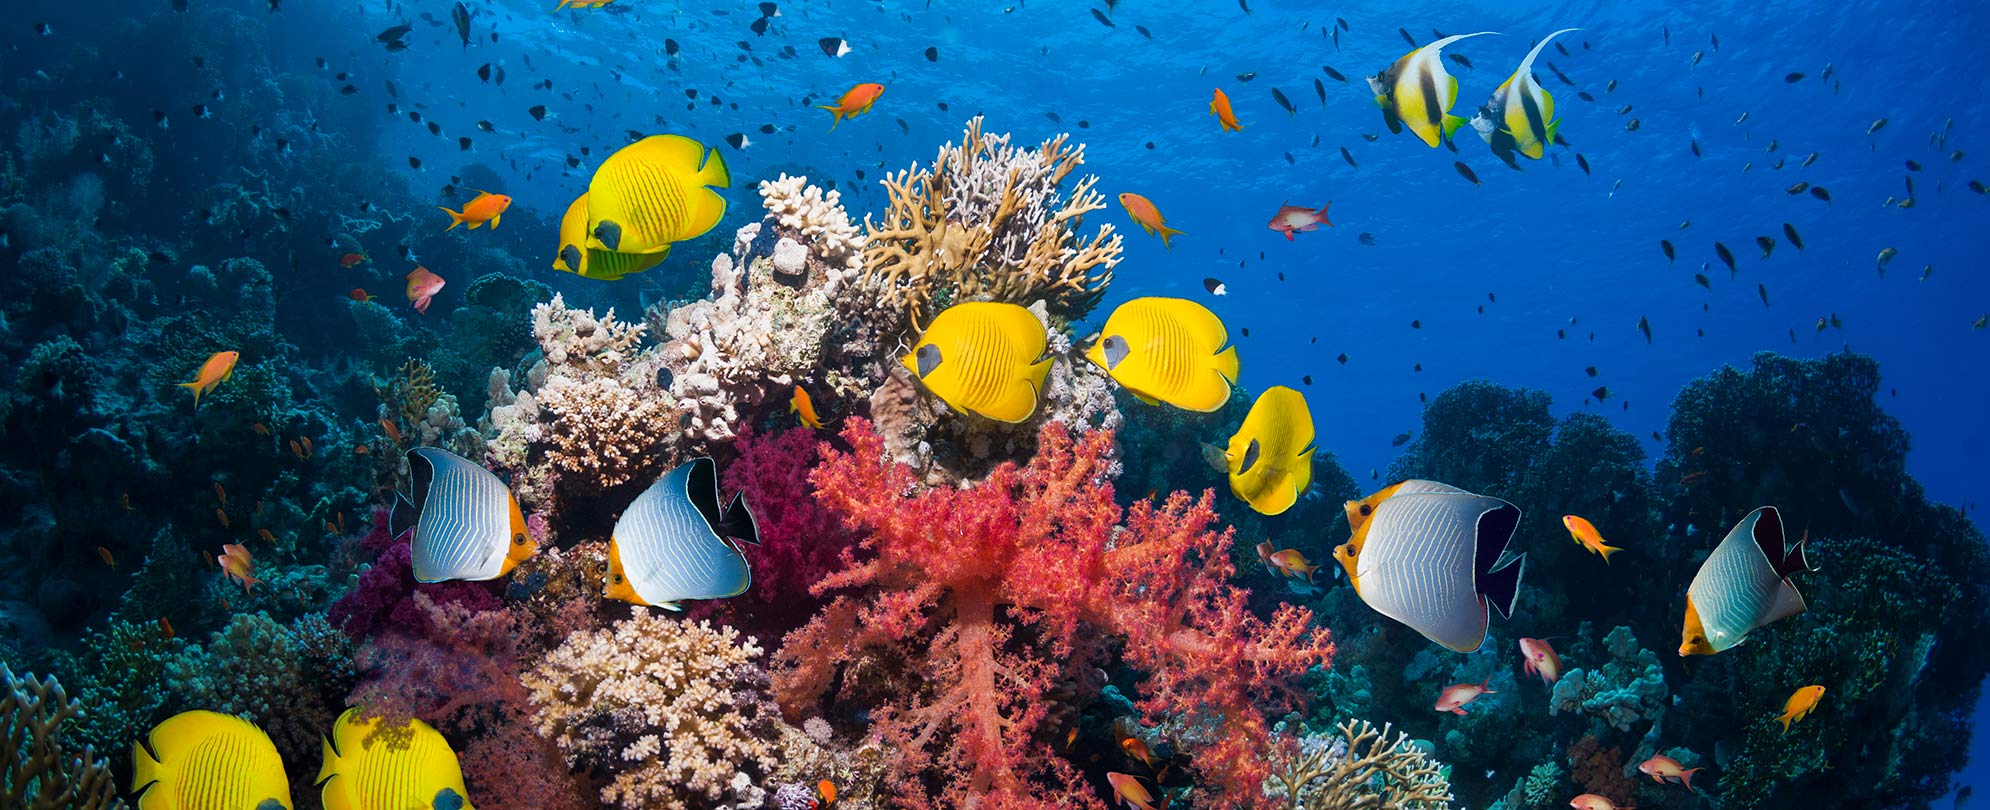 Bright colored fish swim around coral reefs under the ocean near St. Thomas, U.S. Virgin Islands.